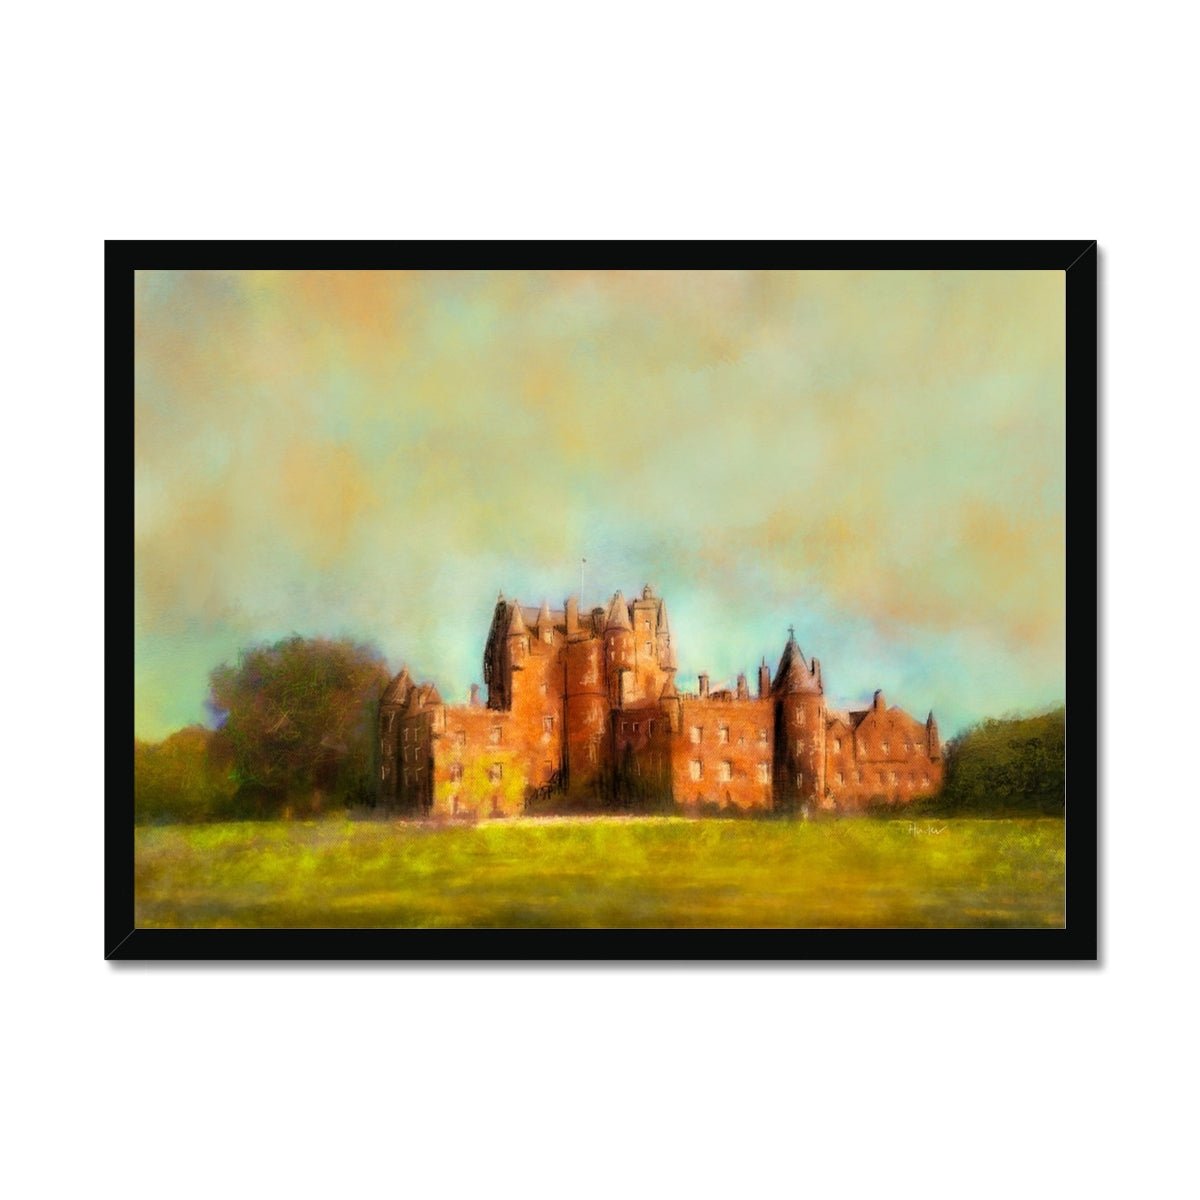 Glamis Castle Painting | Framed Prints From Scotland-Framed Prints-Scottish Castles Art Gallery-A2 Landscape-Black Frame-Paintings, Prints, Homeware, Art Gifts From Scotland By Scottish Artist Kevin Hunter